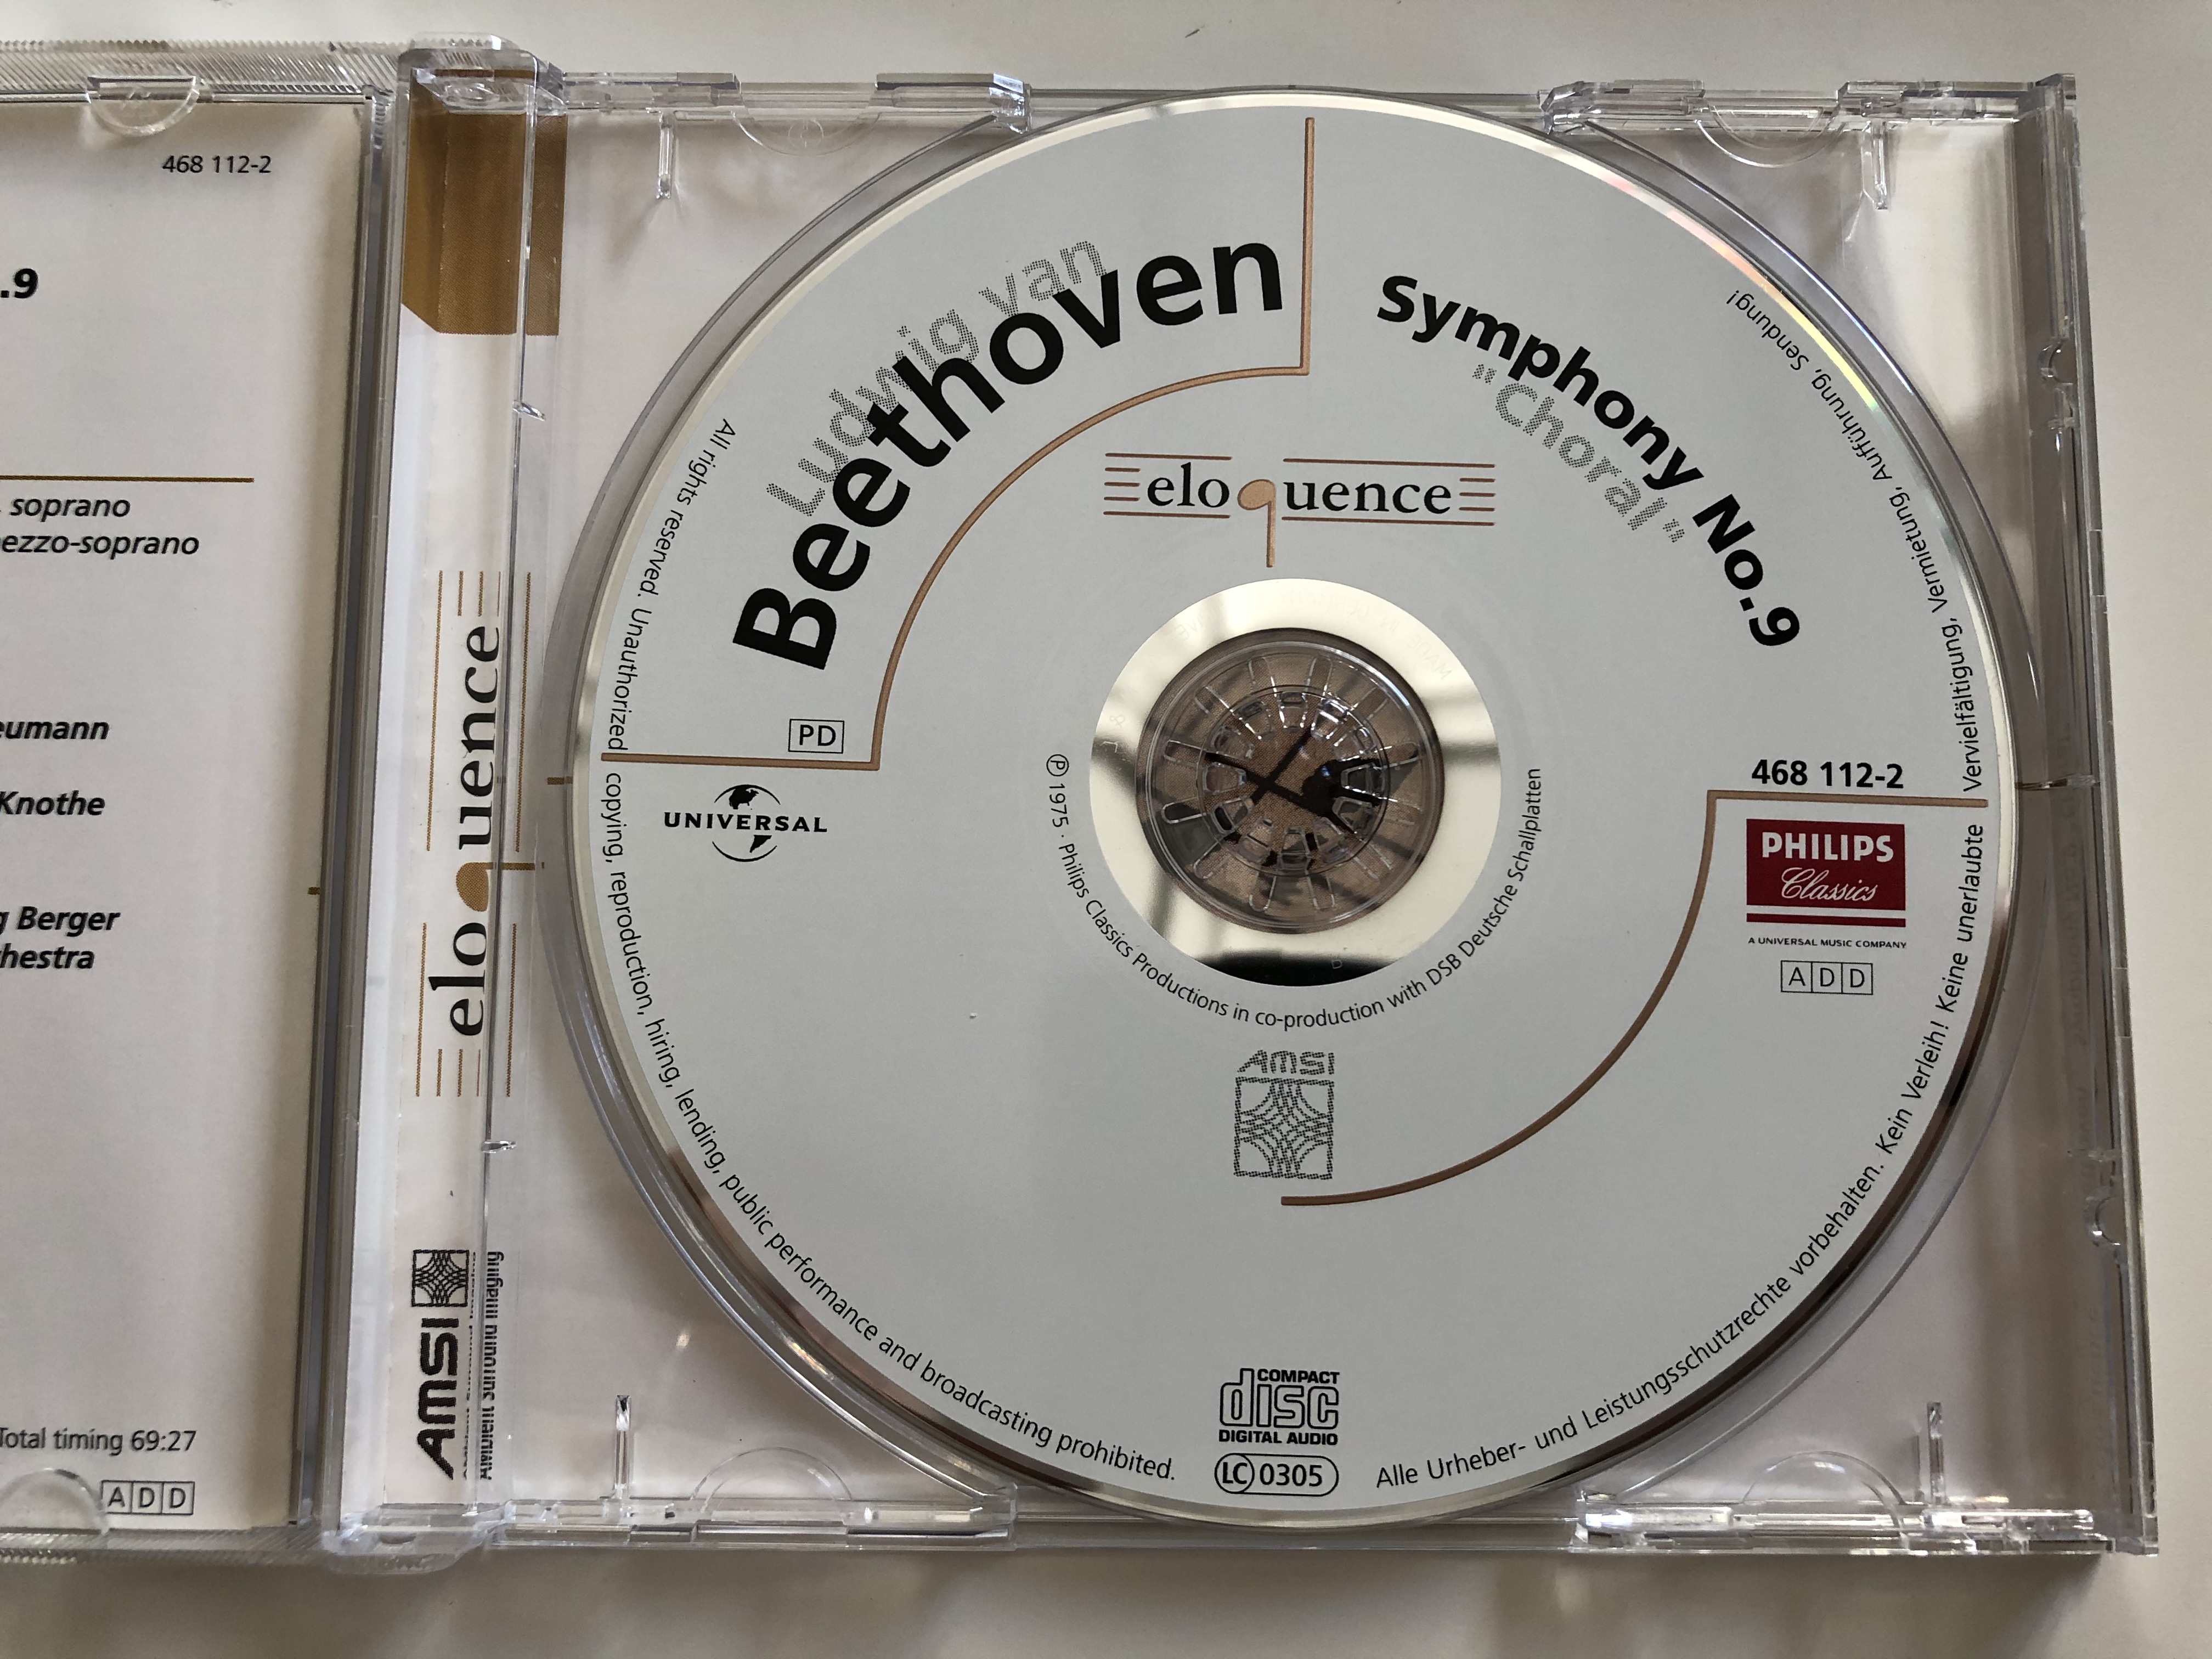 ludwig-van-beethoven-symphonie-nr.-9-choral-tomowa-sintow-burmeister-schreier-adam-leipzig-radio-chorus-leipzig-gewandhaus-orchestra-kurt-masur-philips-classics-audio-cd-1975-468-3-.jpg